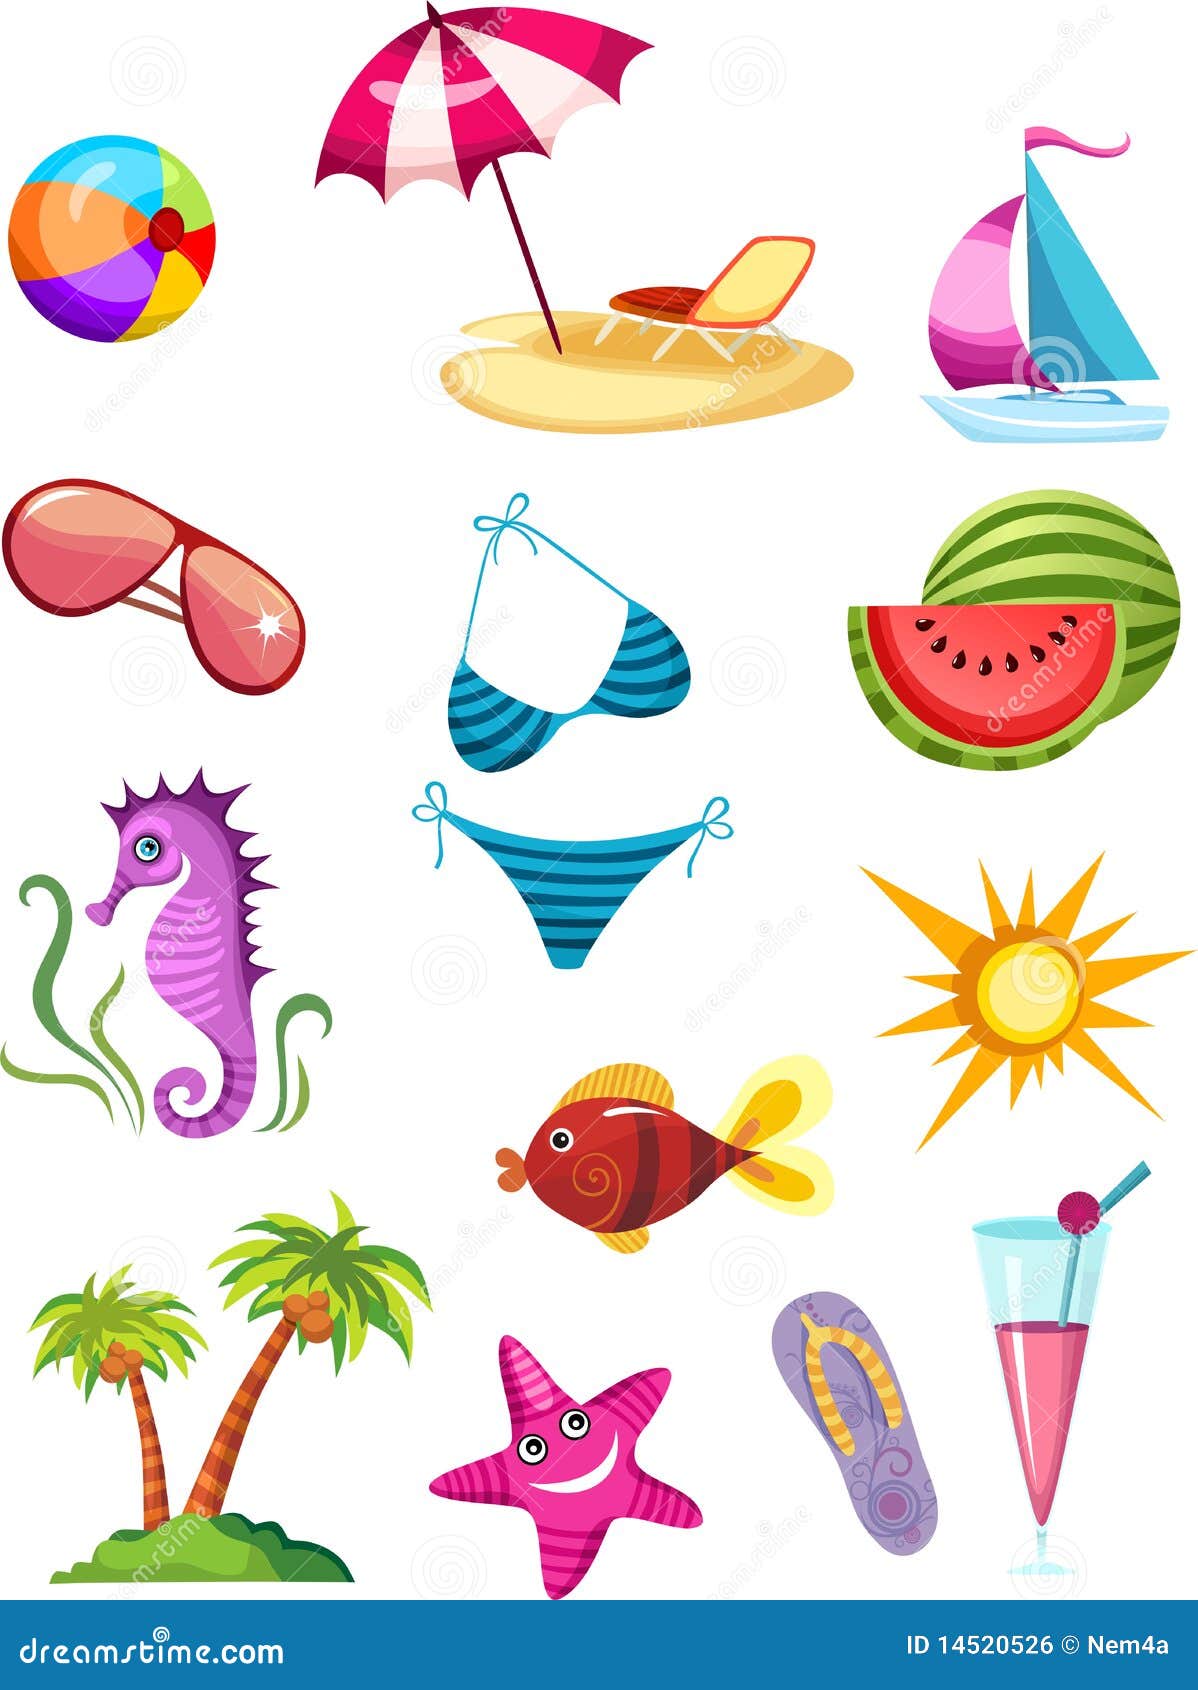 Travel icon set stock vector. Illustration of bikini - 14520526